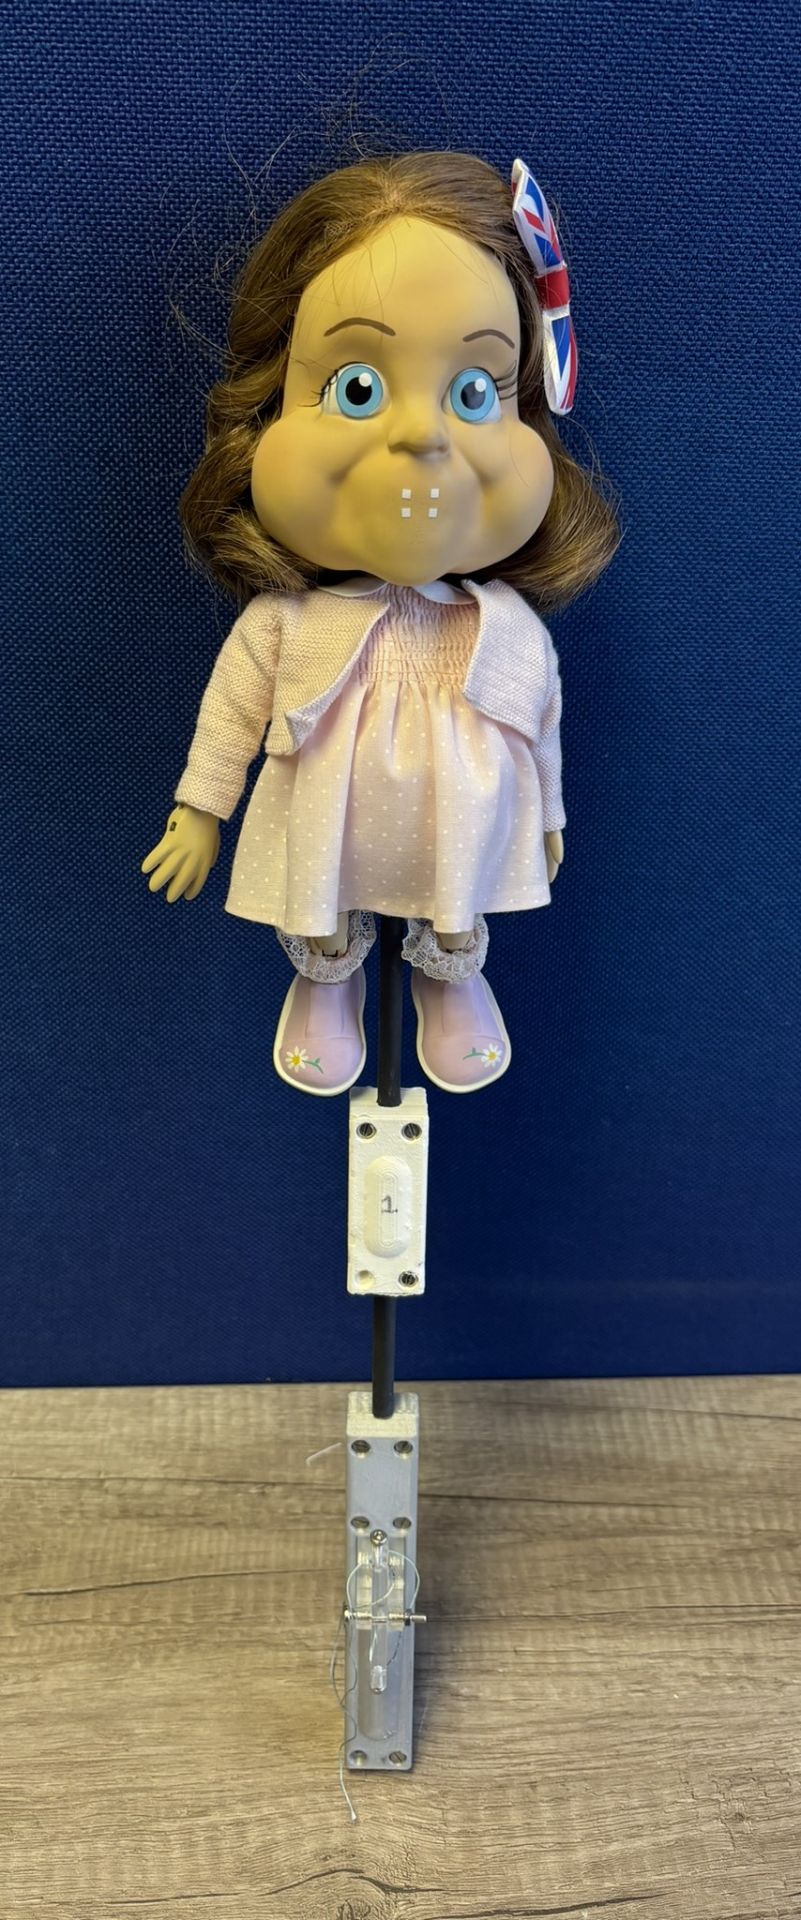 Newzoid puppet - Princess Charlotte - Image 3 of 3